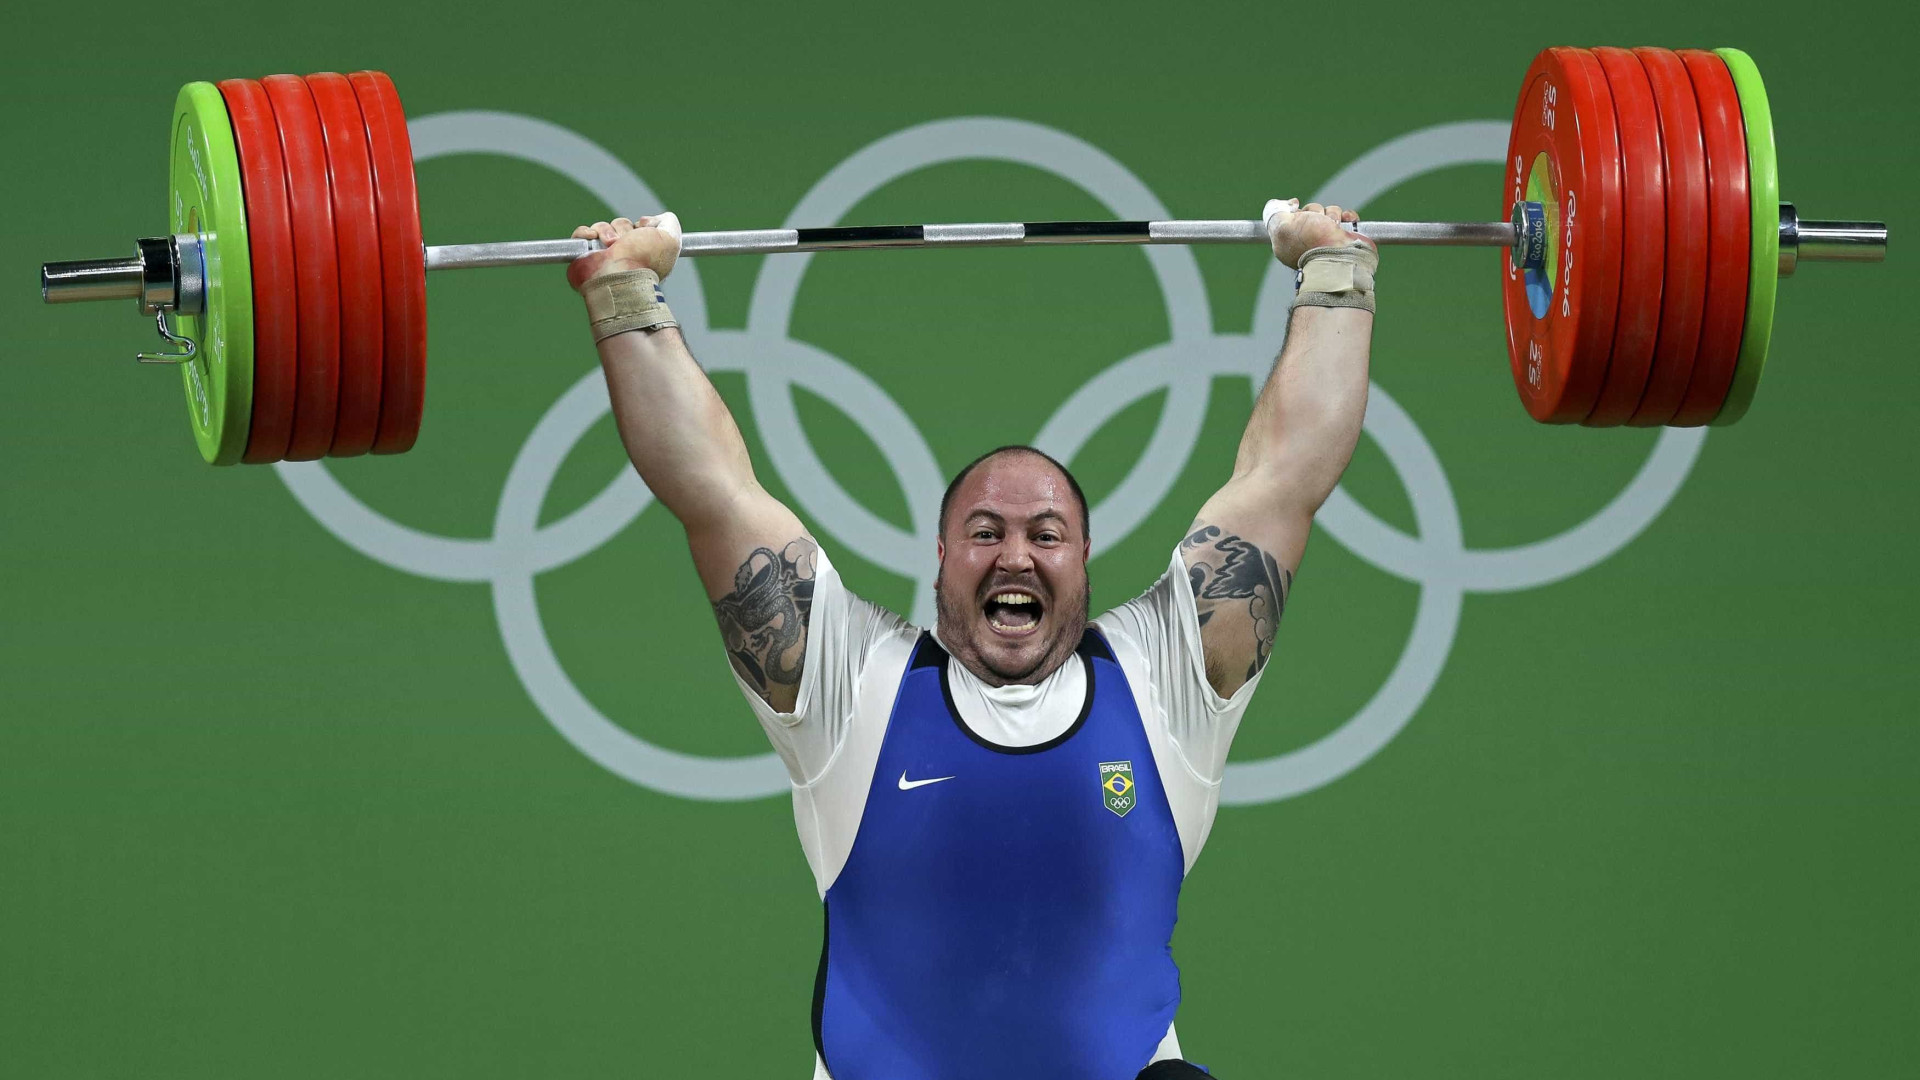 Olimpíada: Fernando Reis testa positivo em exame antidoping